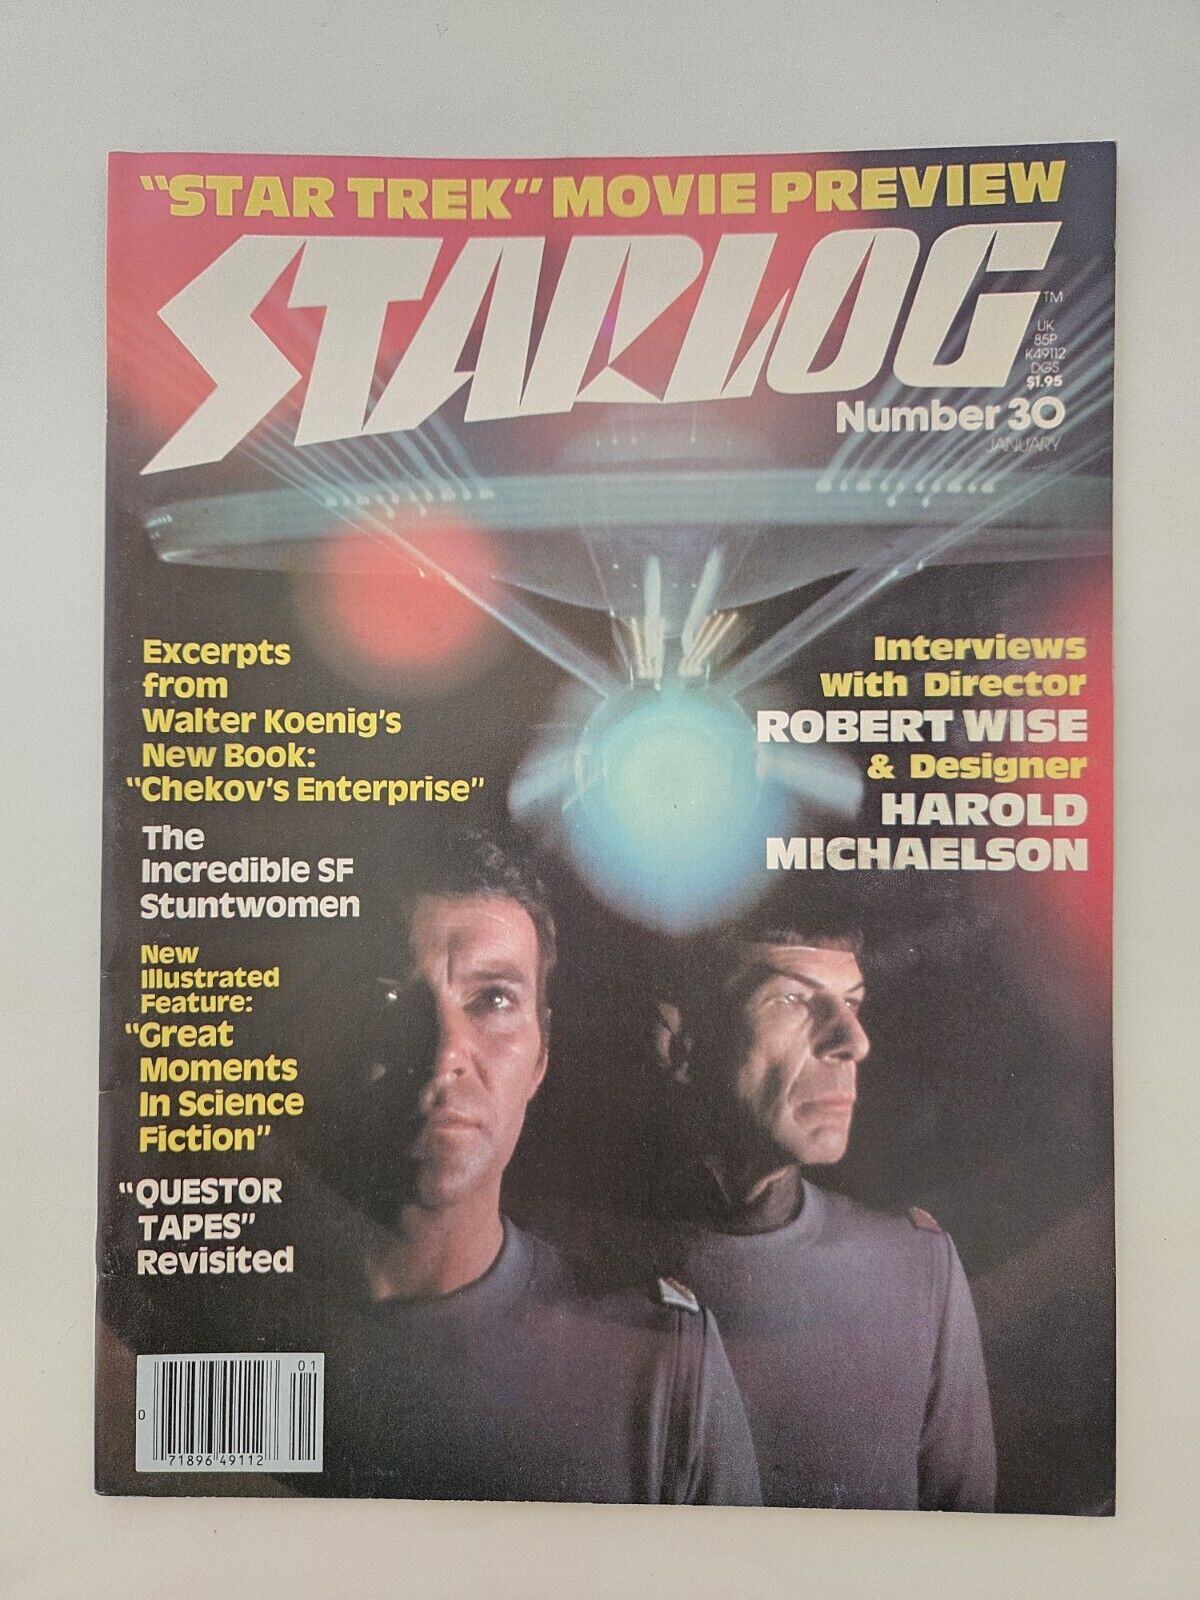 STARLOG #30 - 1980 January Featuring Star Trek On Cover VINTAGE